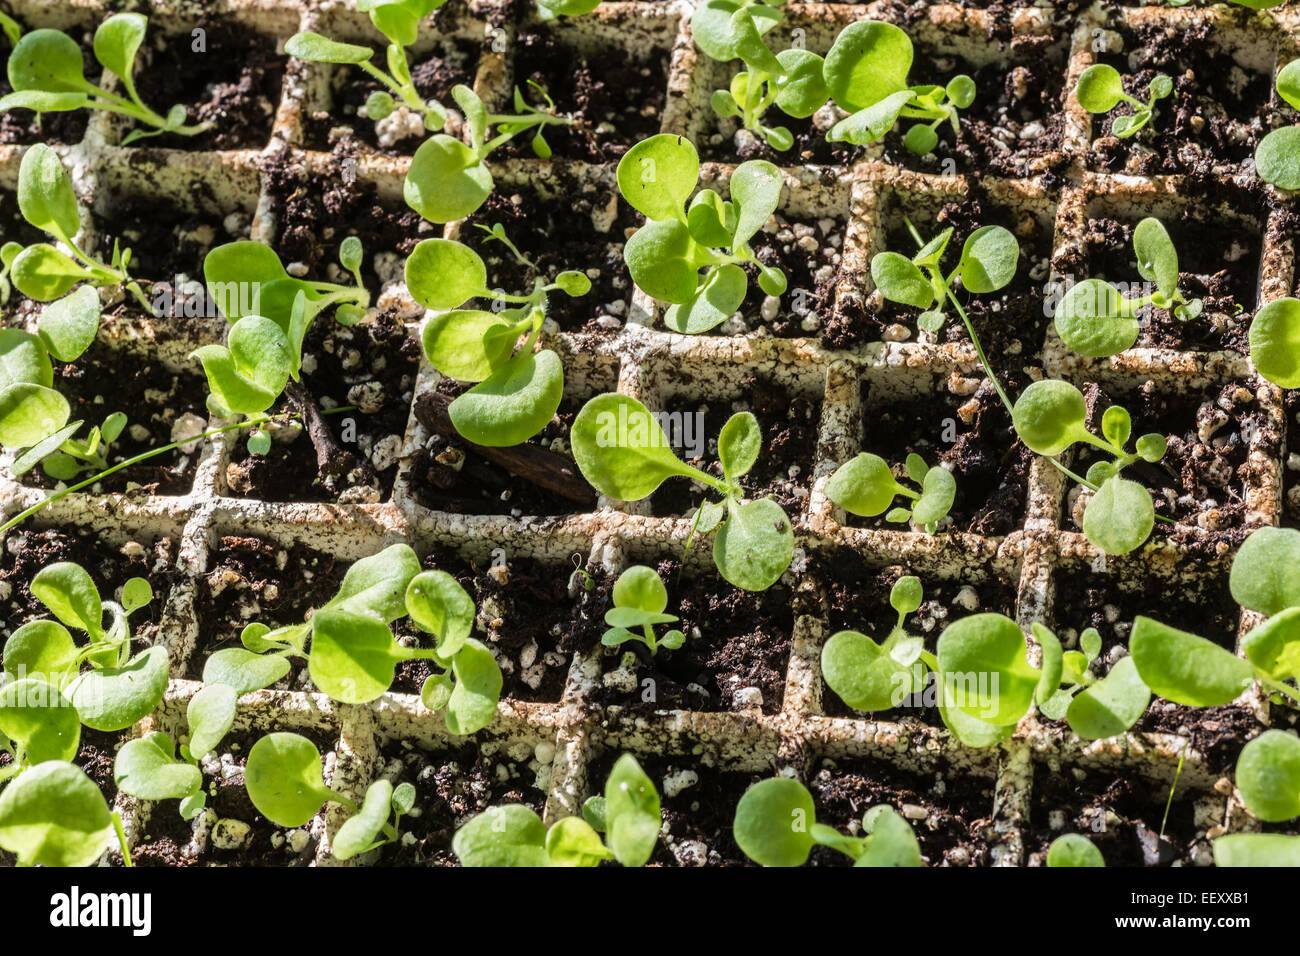 Petunia seedlings growing in a styrofoam tray. Stock Photo